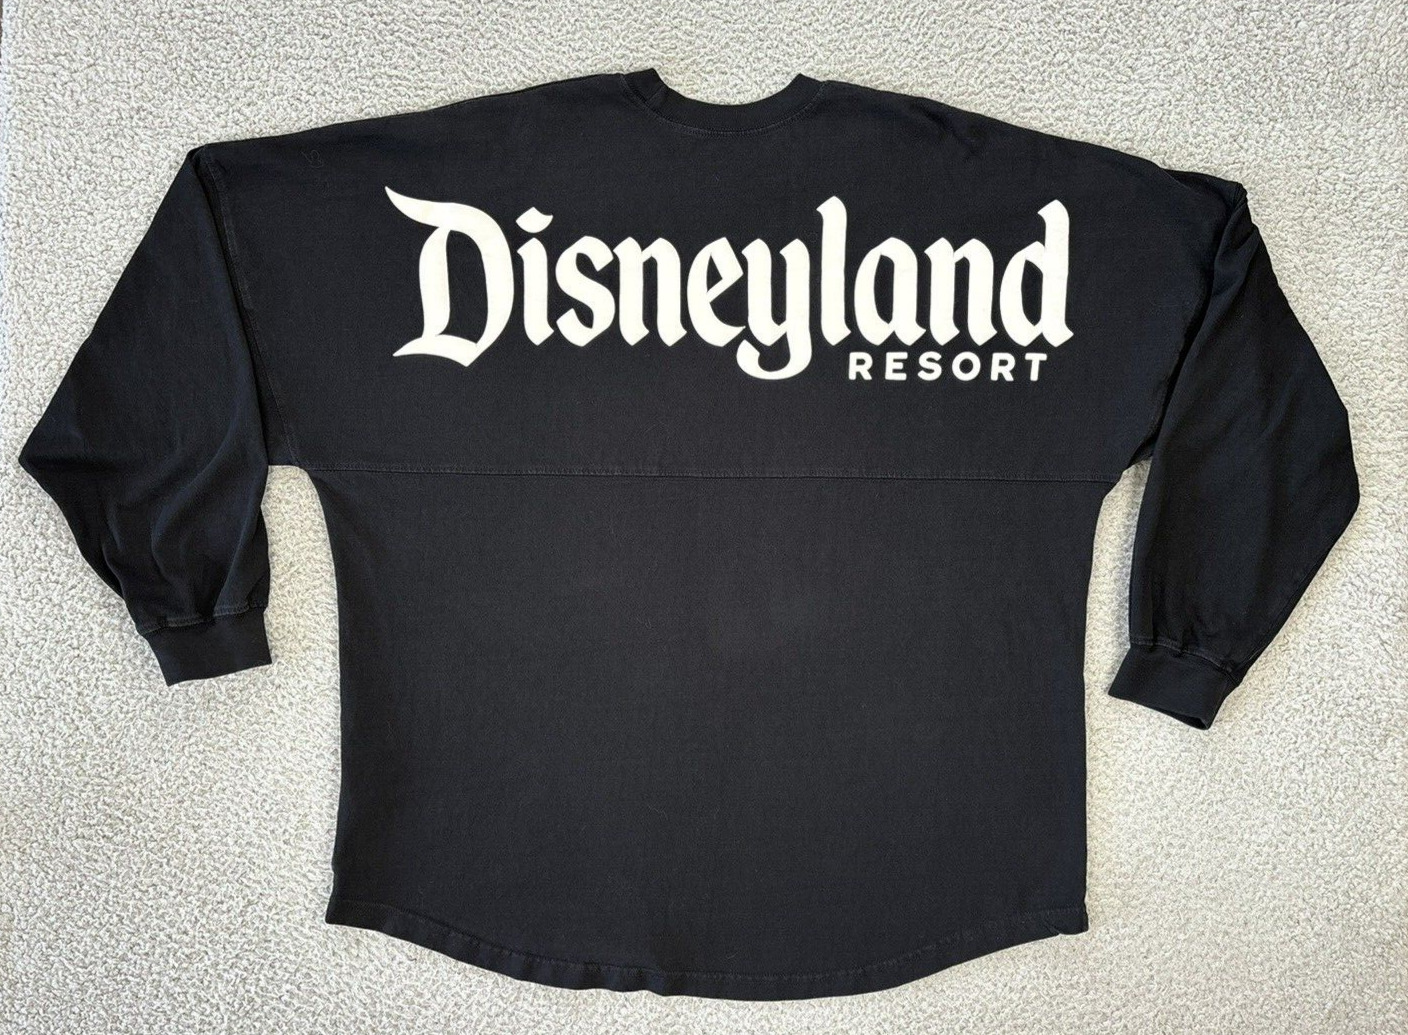 Disneyland Resorts Disney Parks Spirit Jersey Adult Size XL Black Long Sleeve